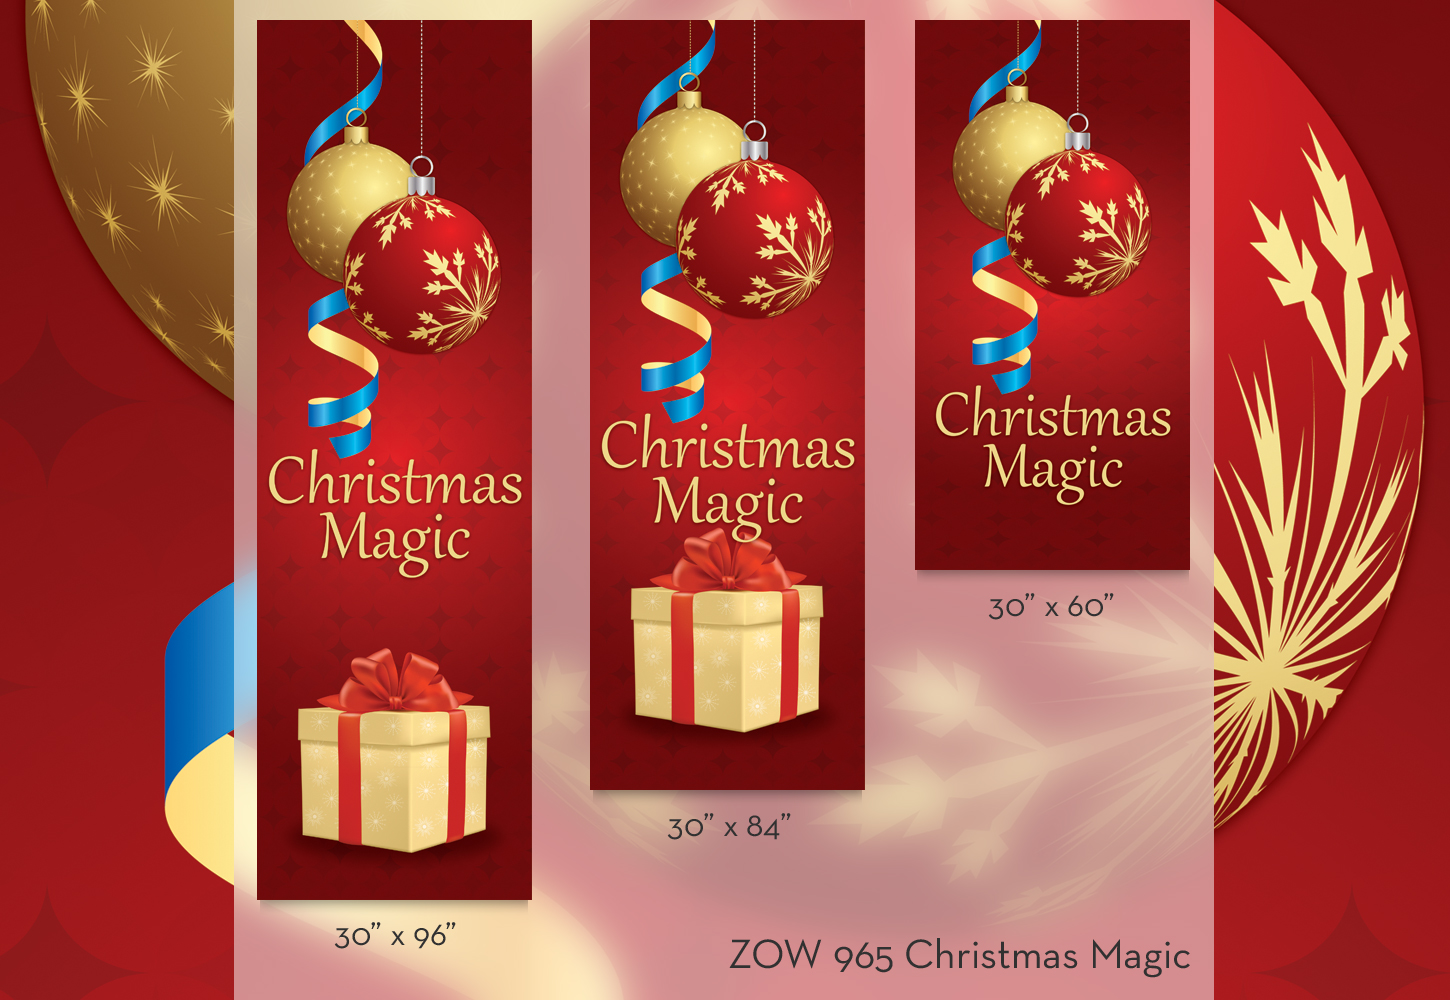 ZOW 965 Christmas Magic